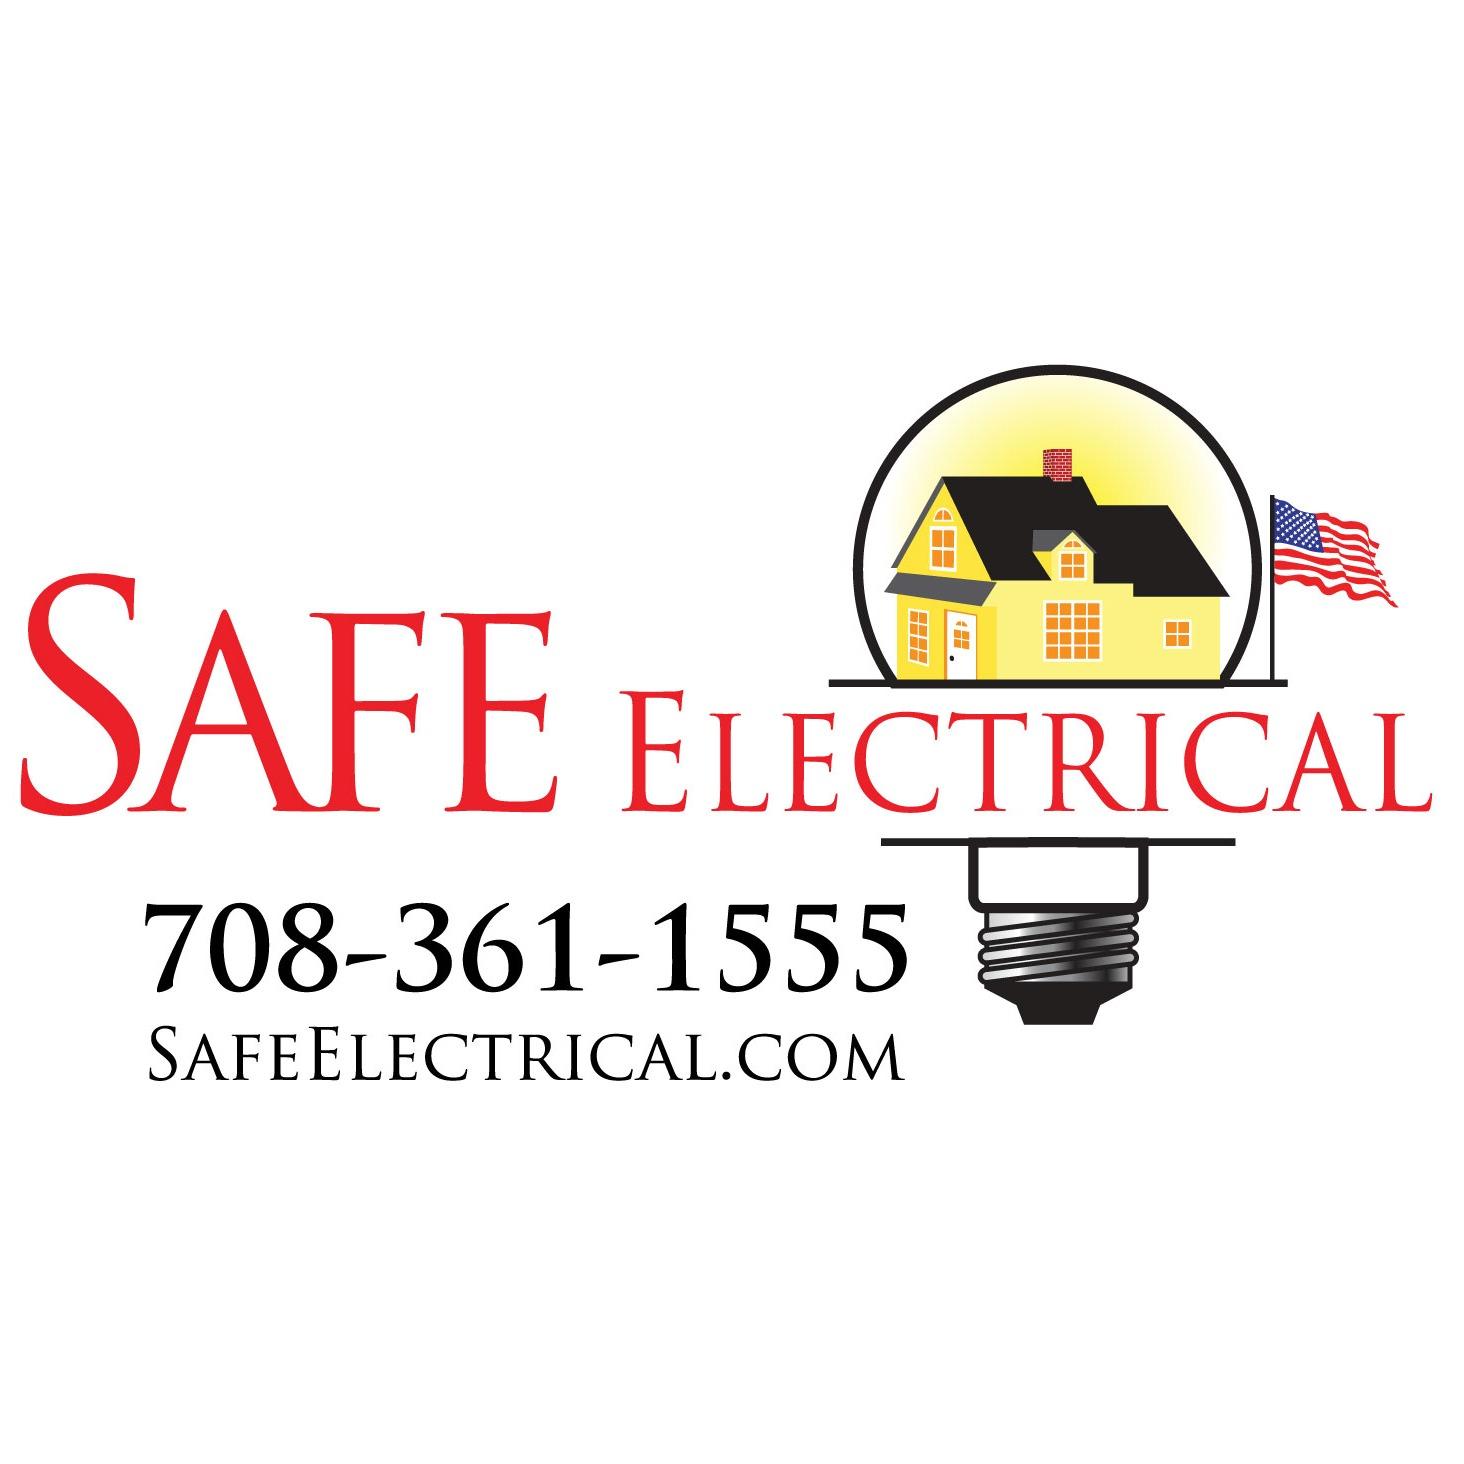 SAFE Electrical Service - Chicago, IL 60643 - (708)361-1555 | ShowMeLocal.com